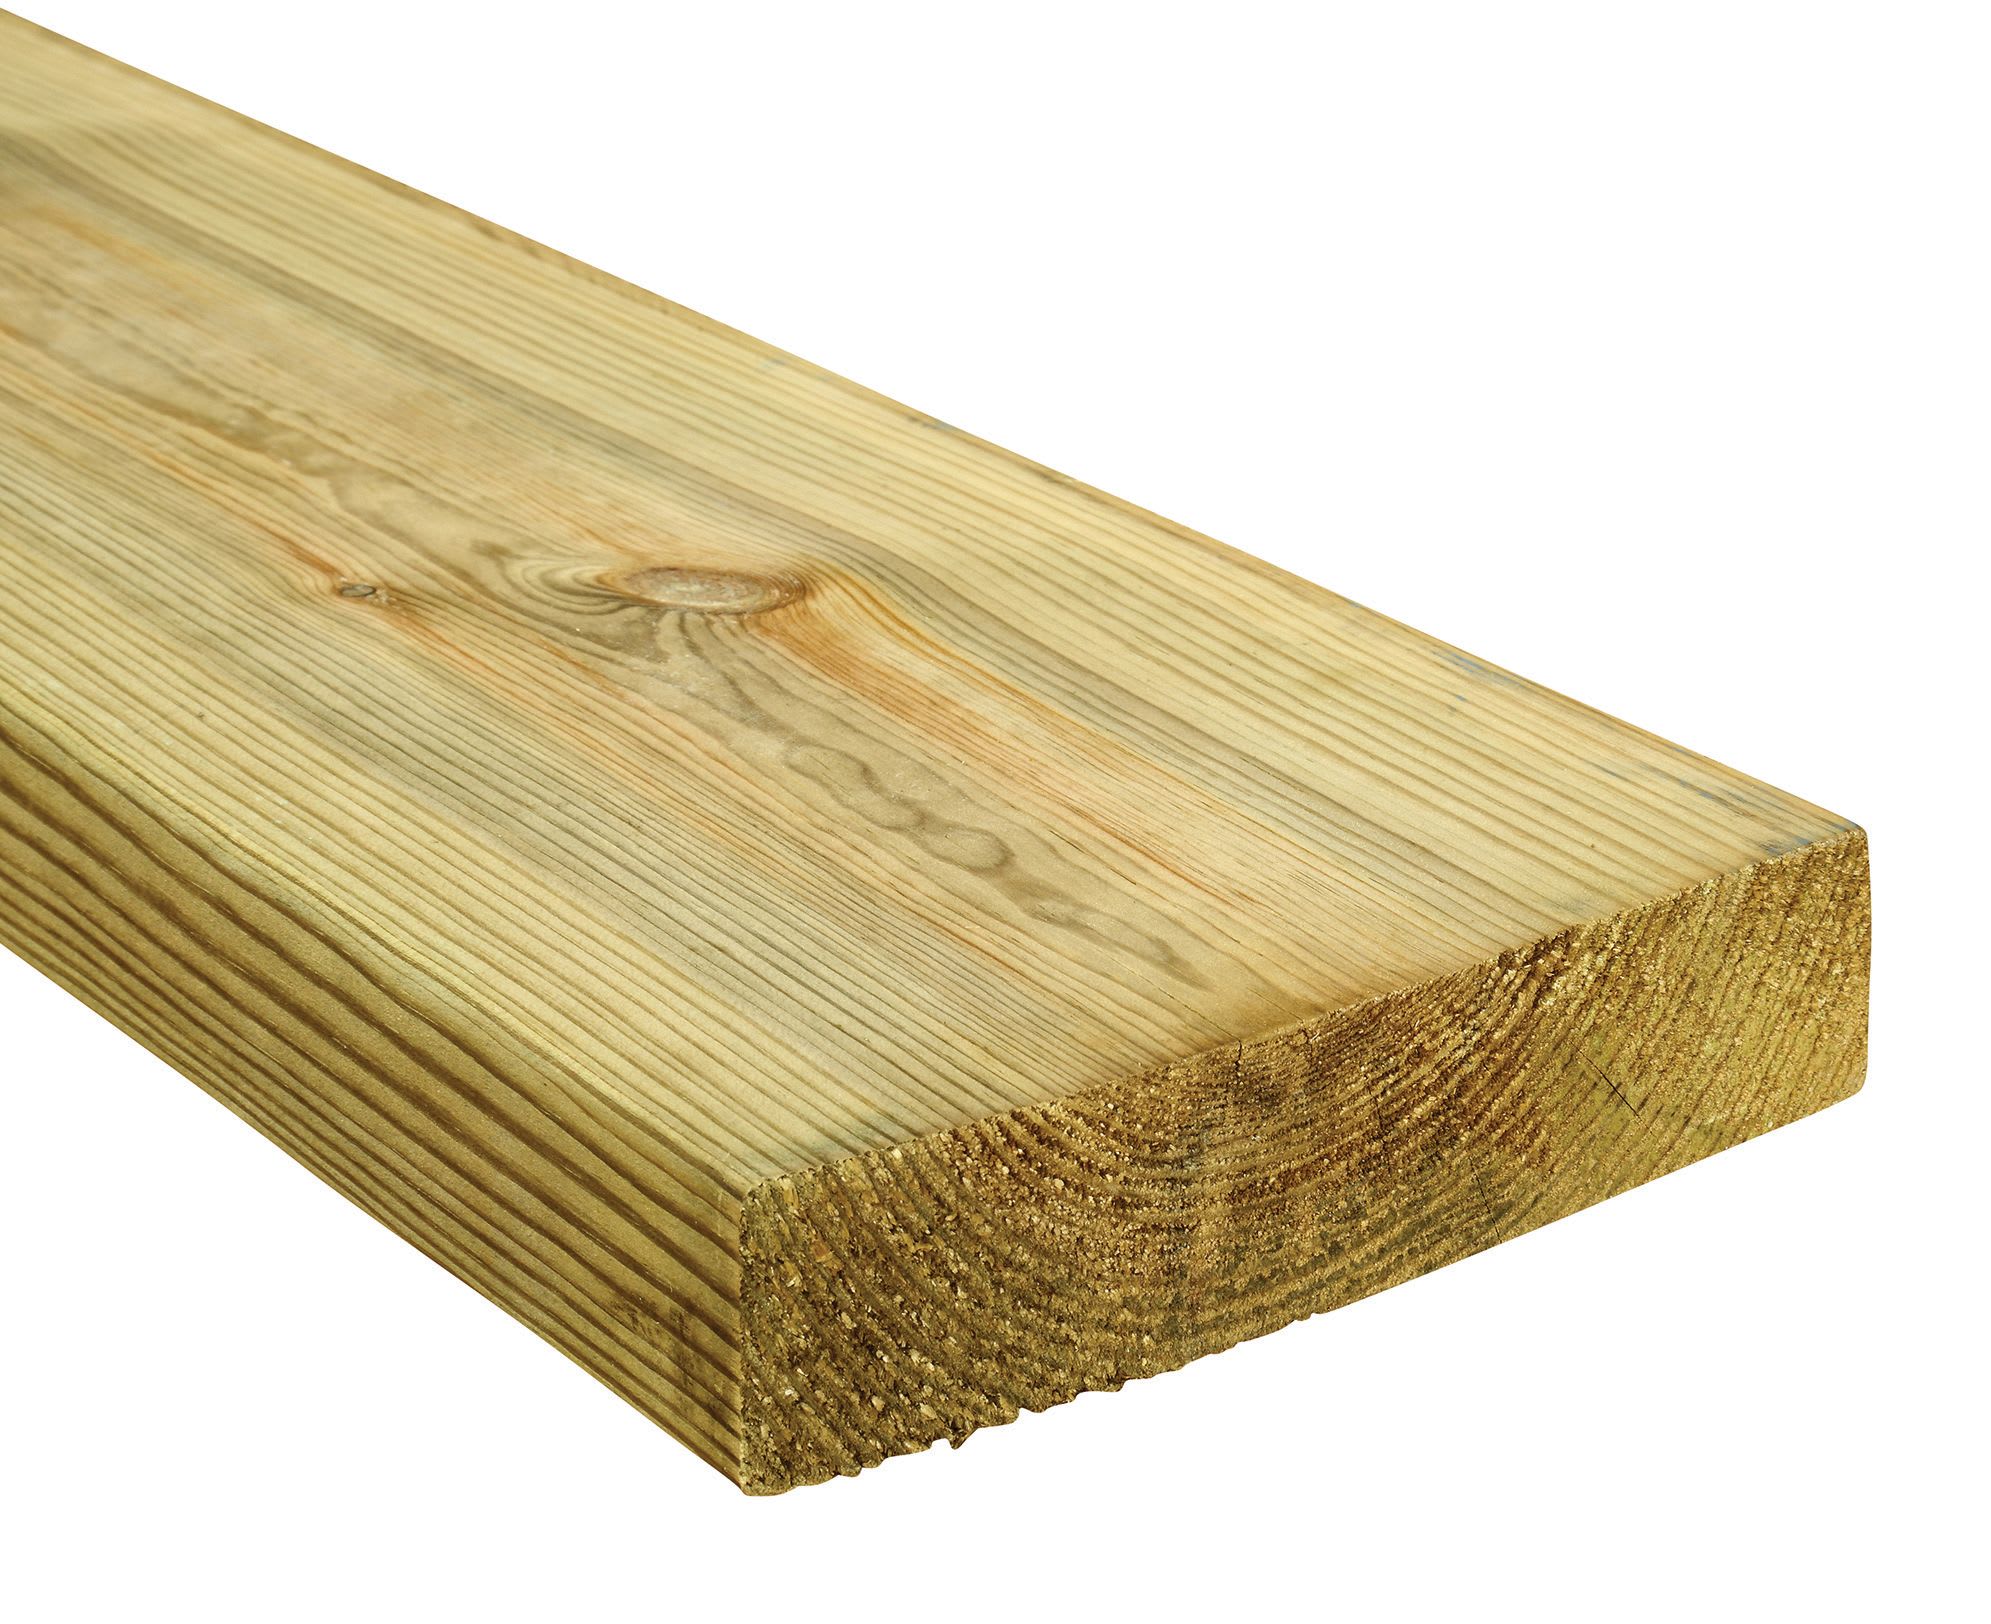 Wickes Treated Kiln Dried C24 Regularised Timber -